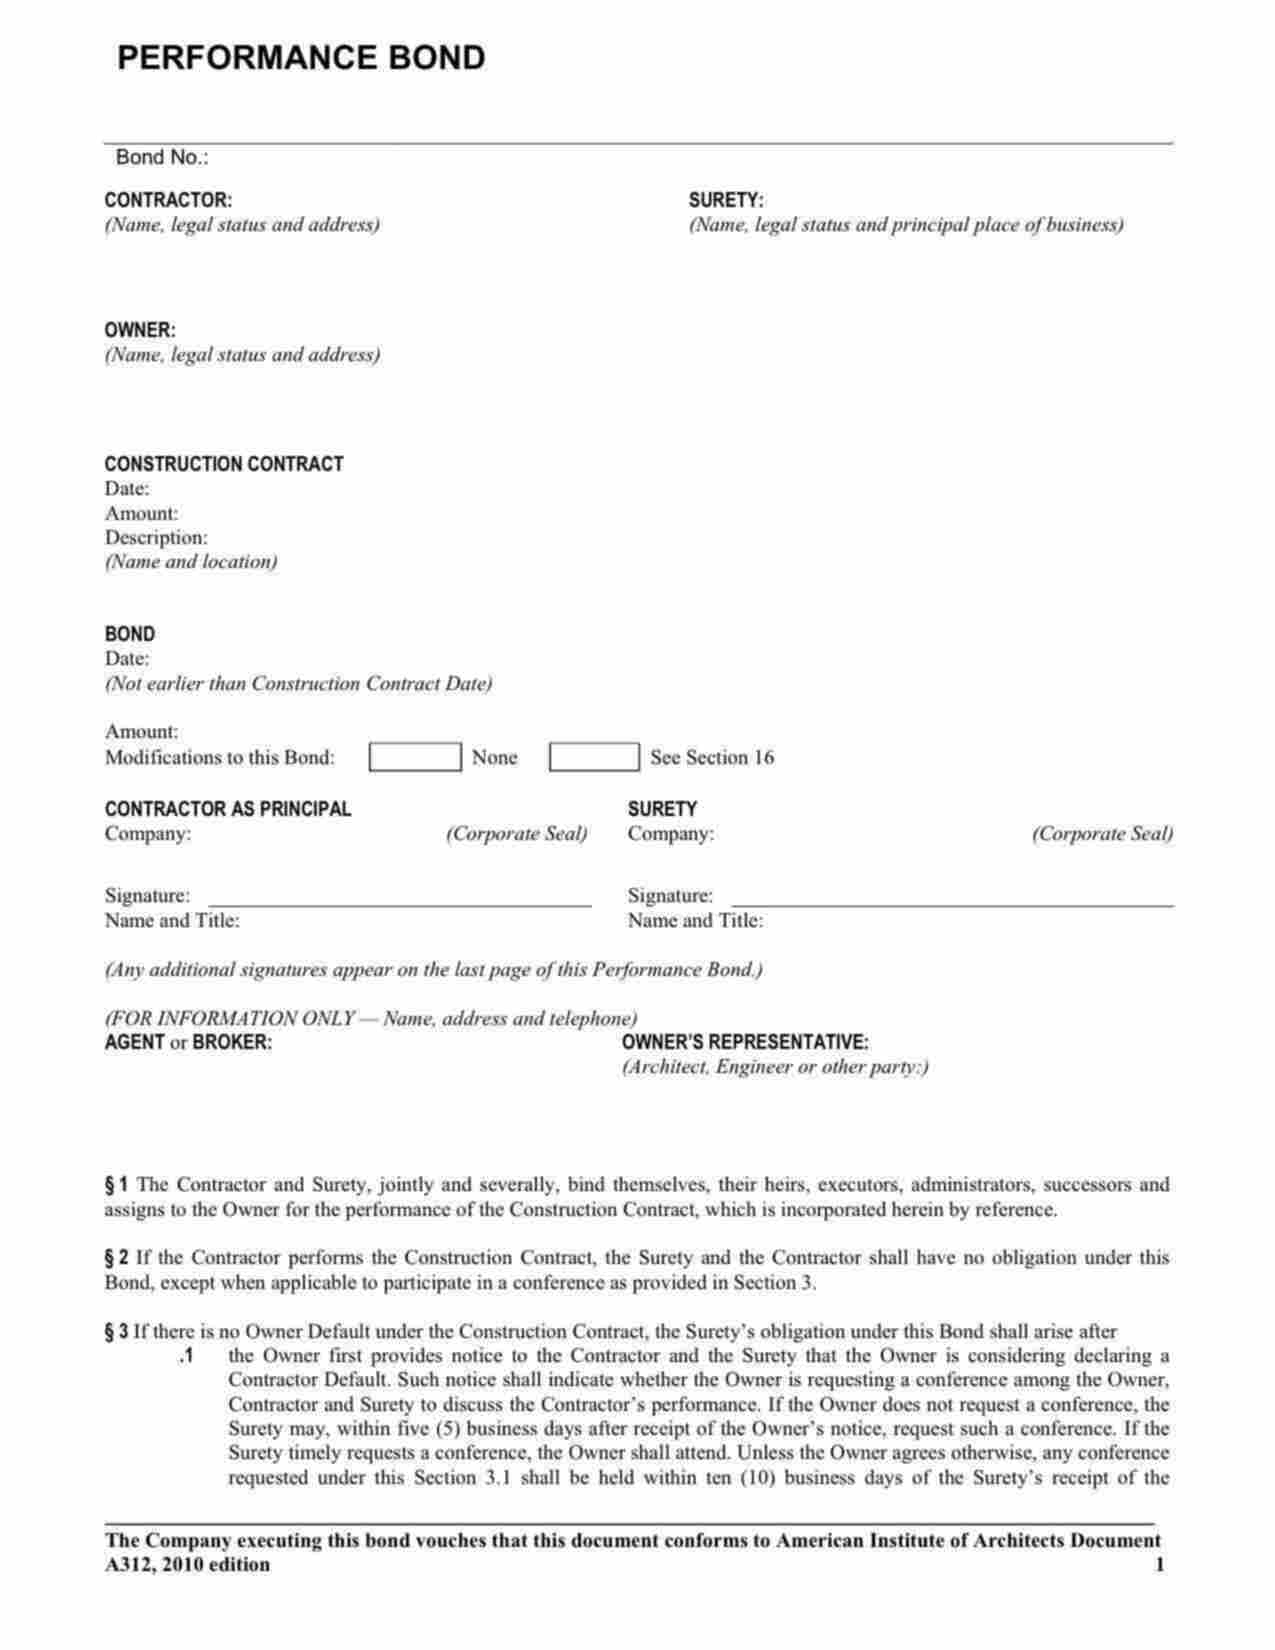 Arizona Contract - Payment / Performance Bond Form